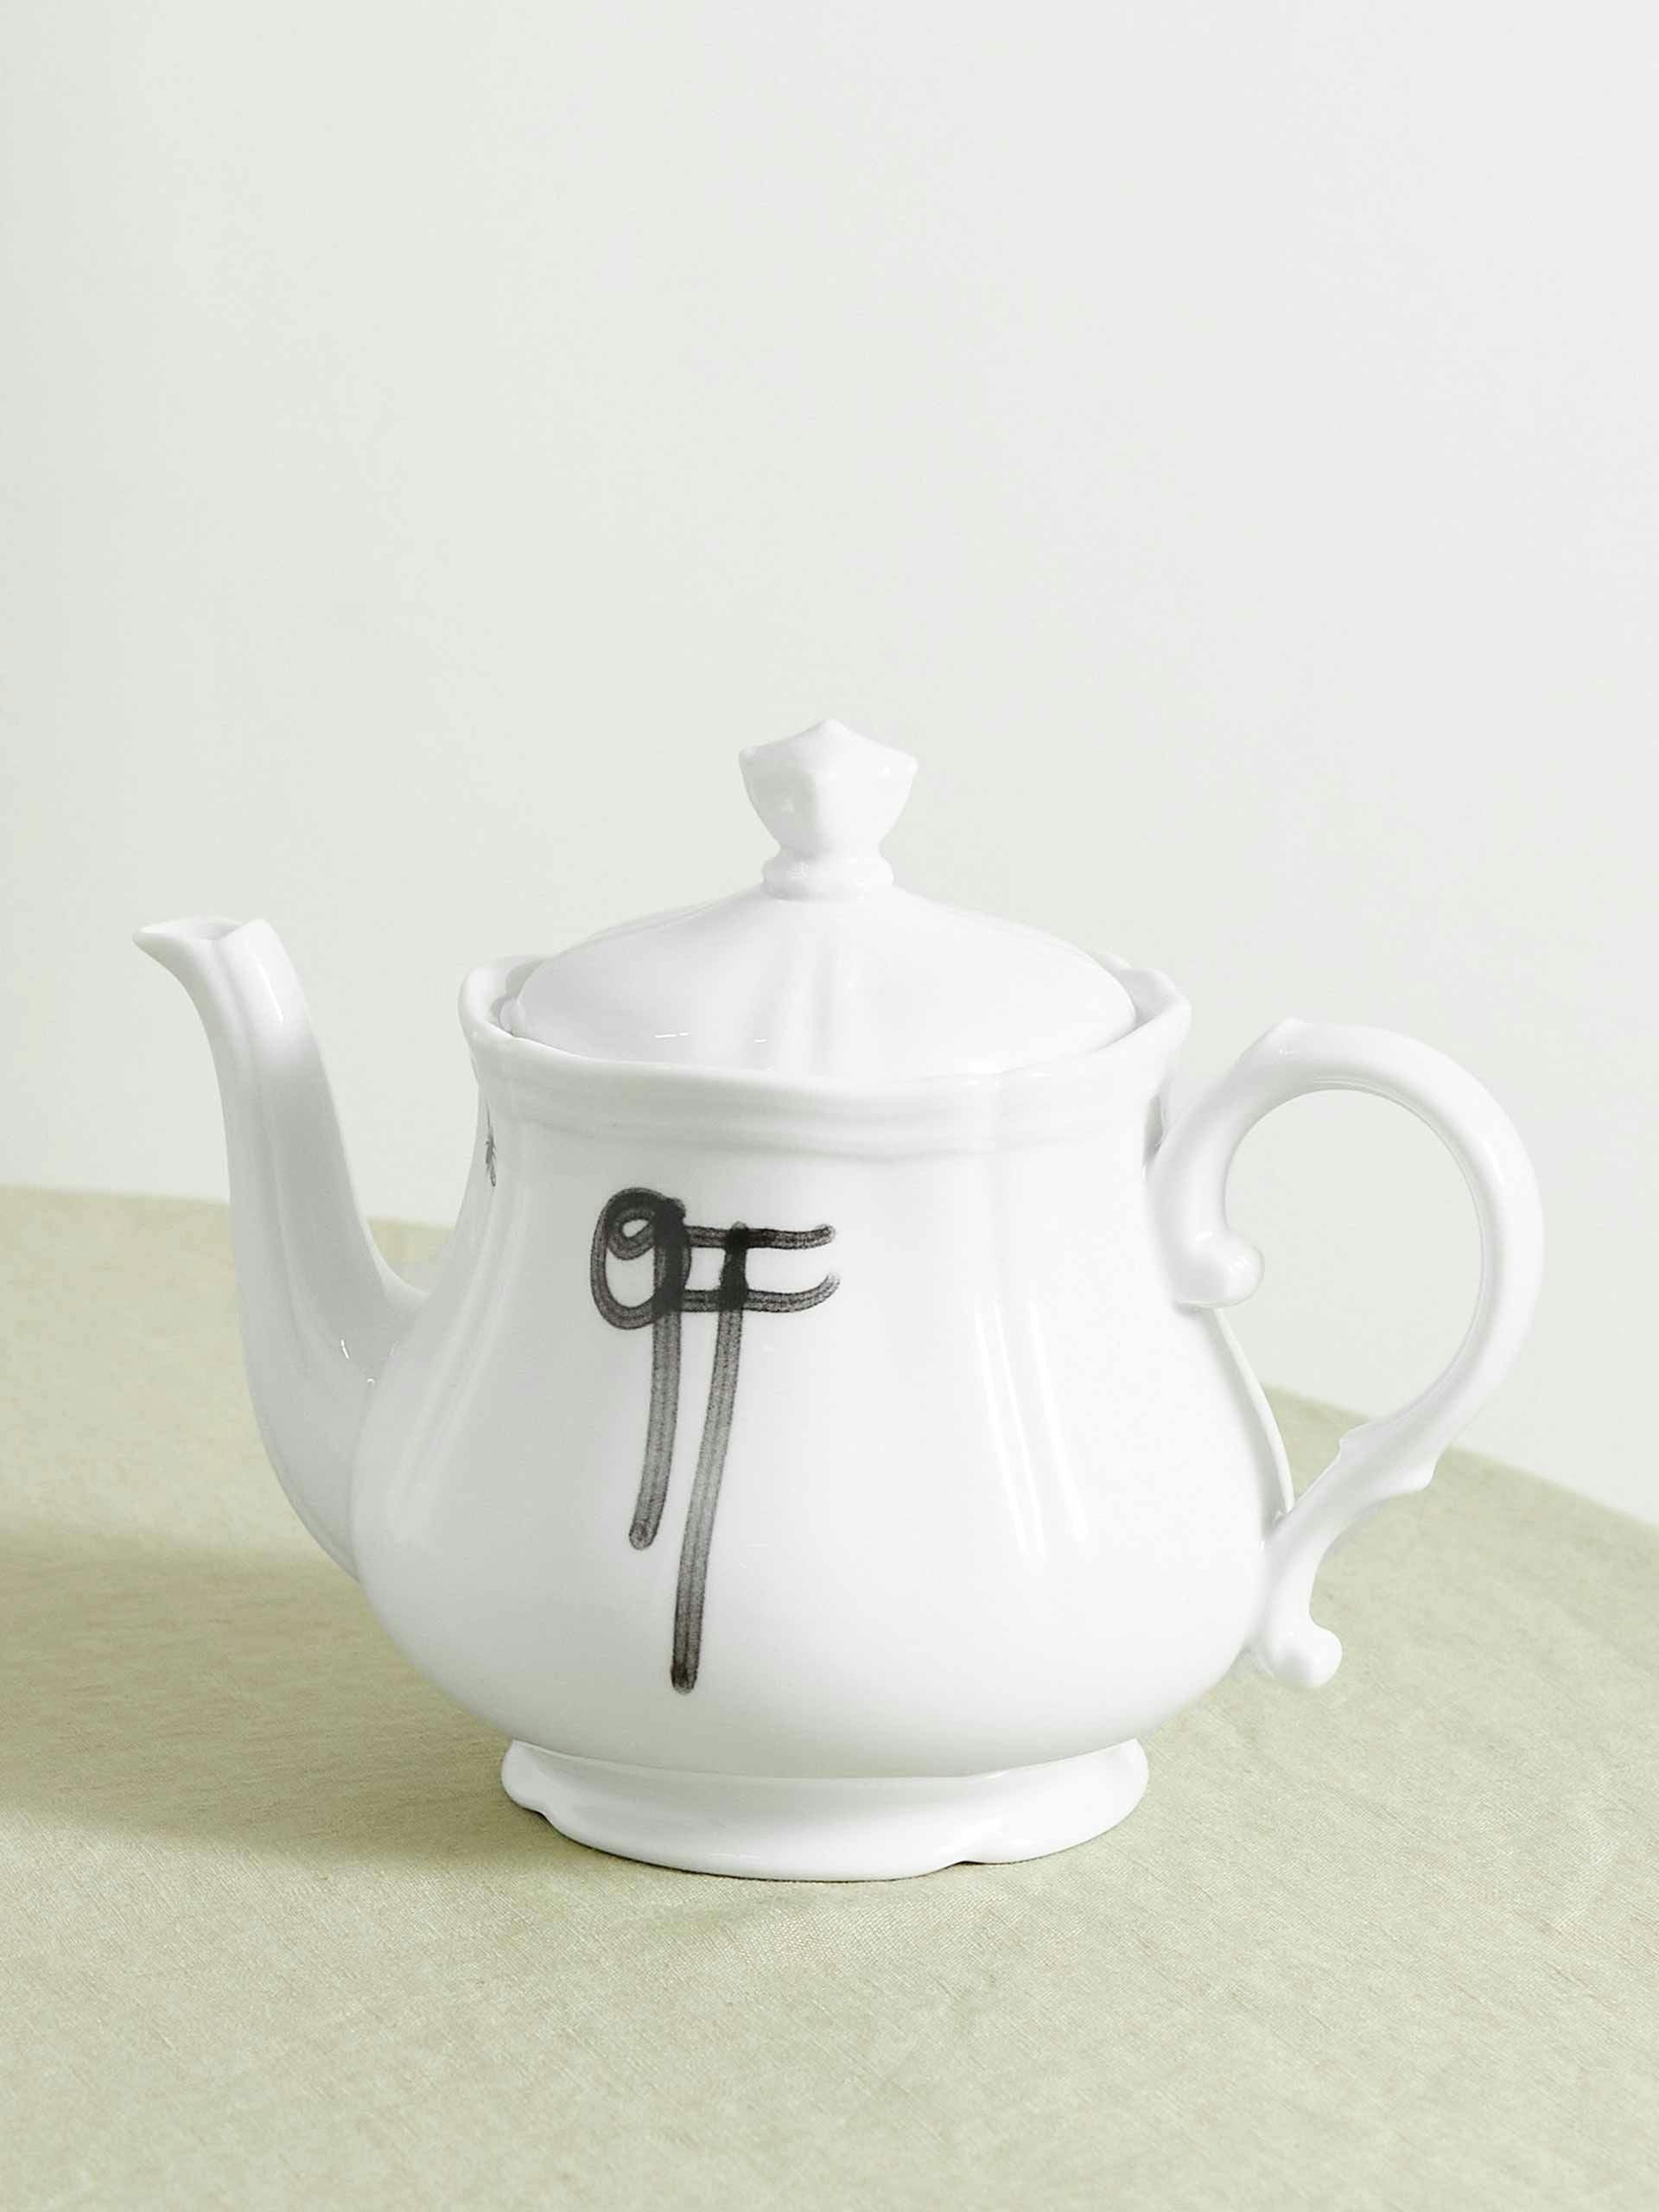 Printed porcelain teapot